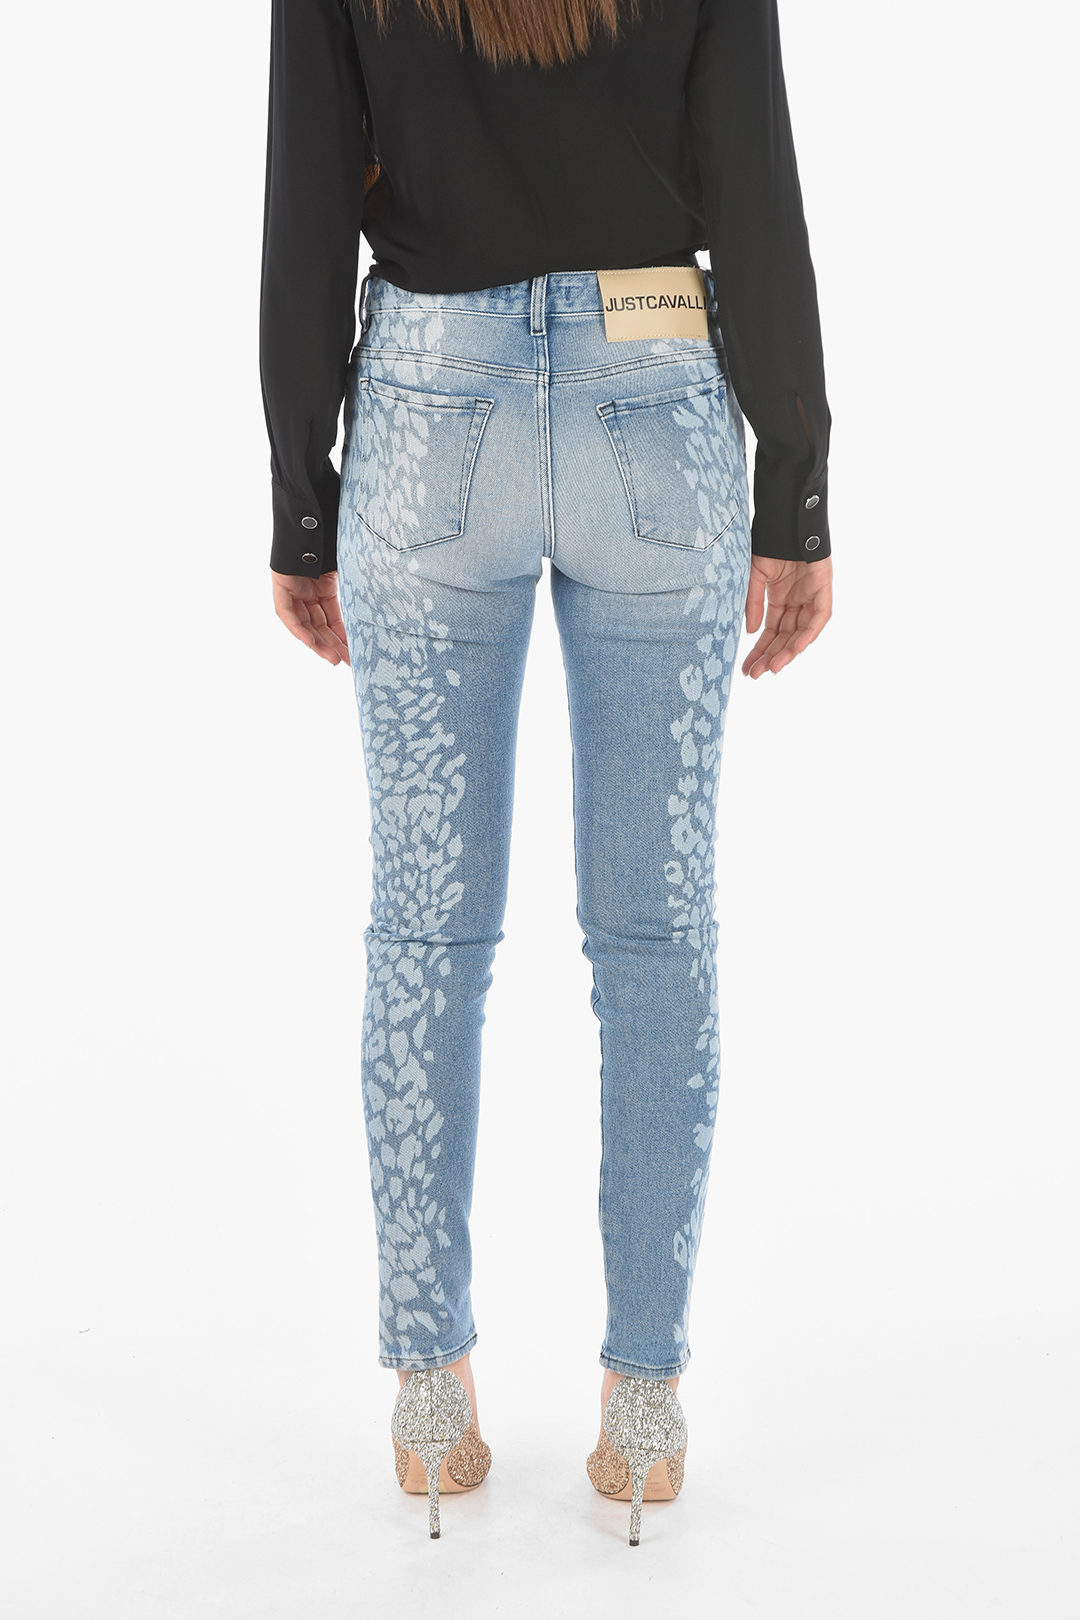 Mursten hældning Autonom Just Cavalli Animal Patterned Slim Fit Jeans women - Glamood Outlet